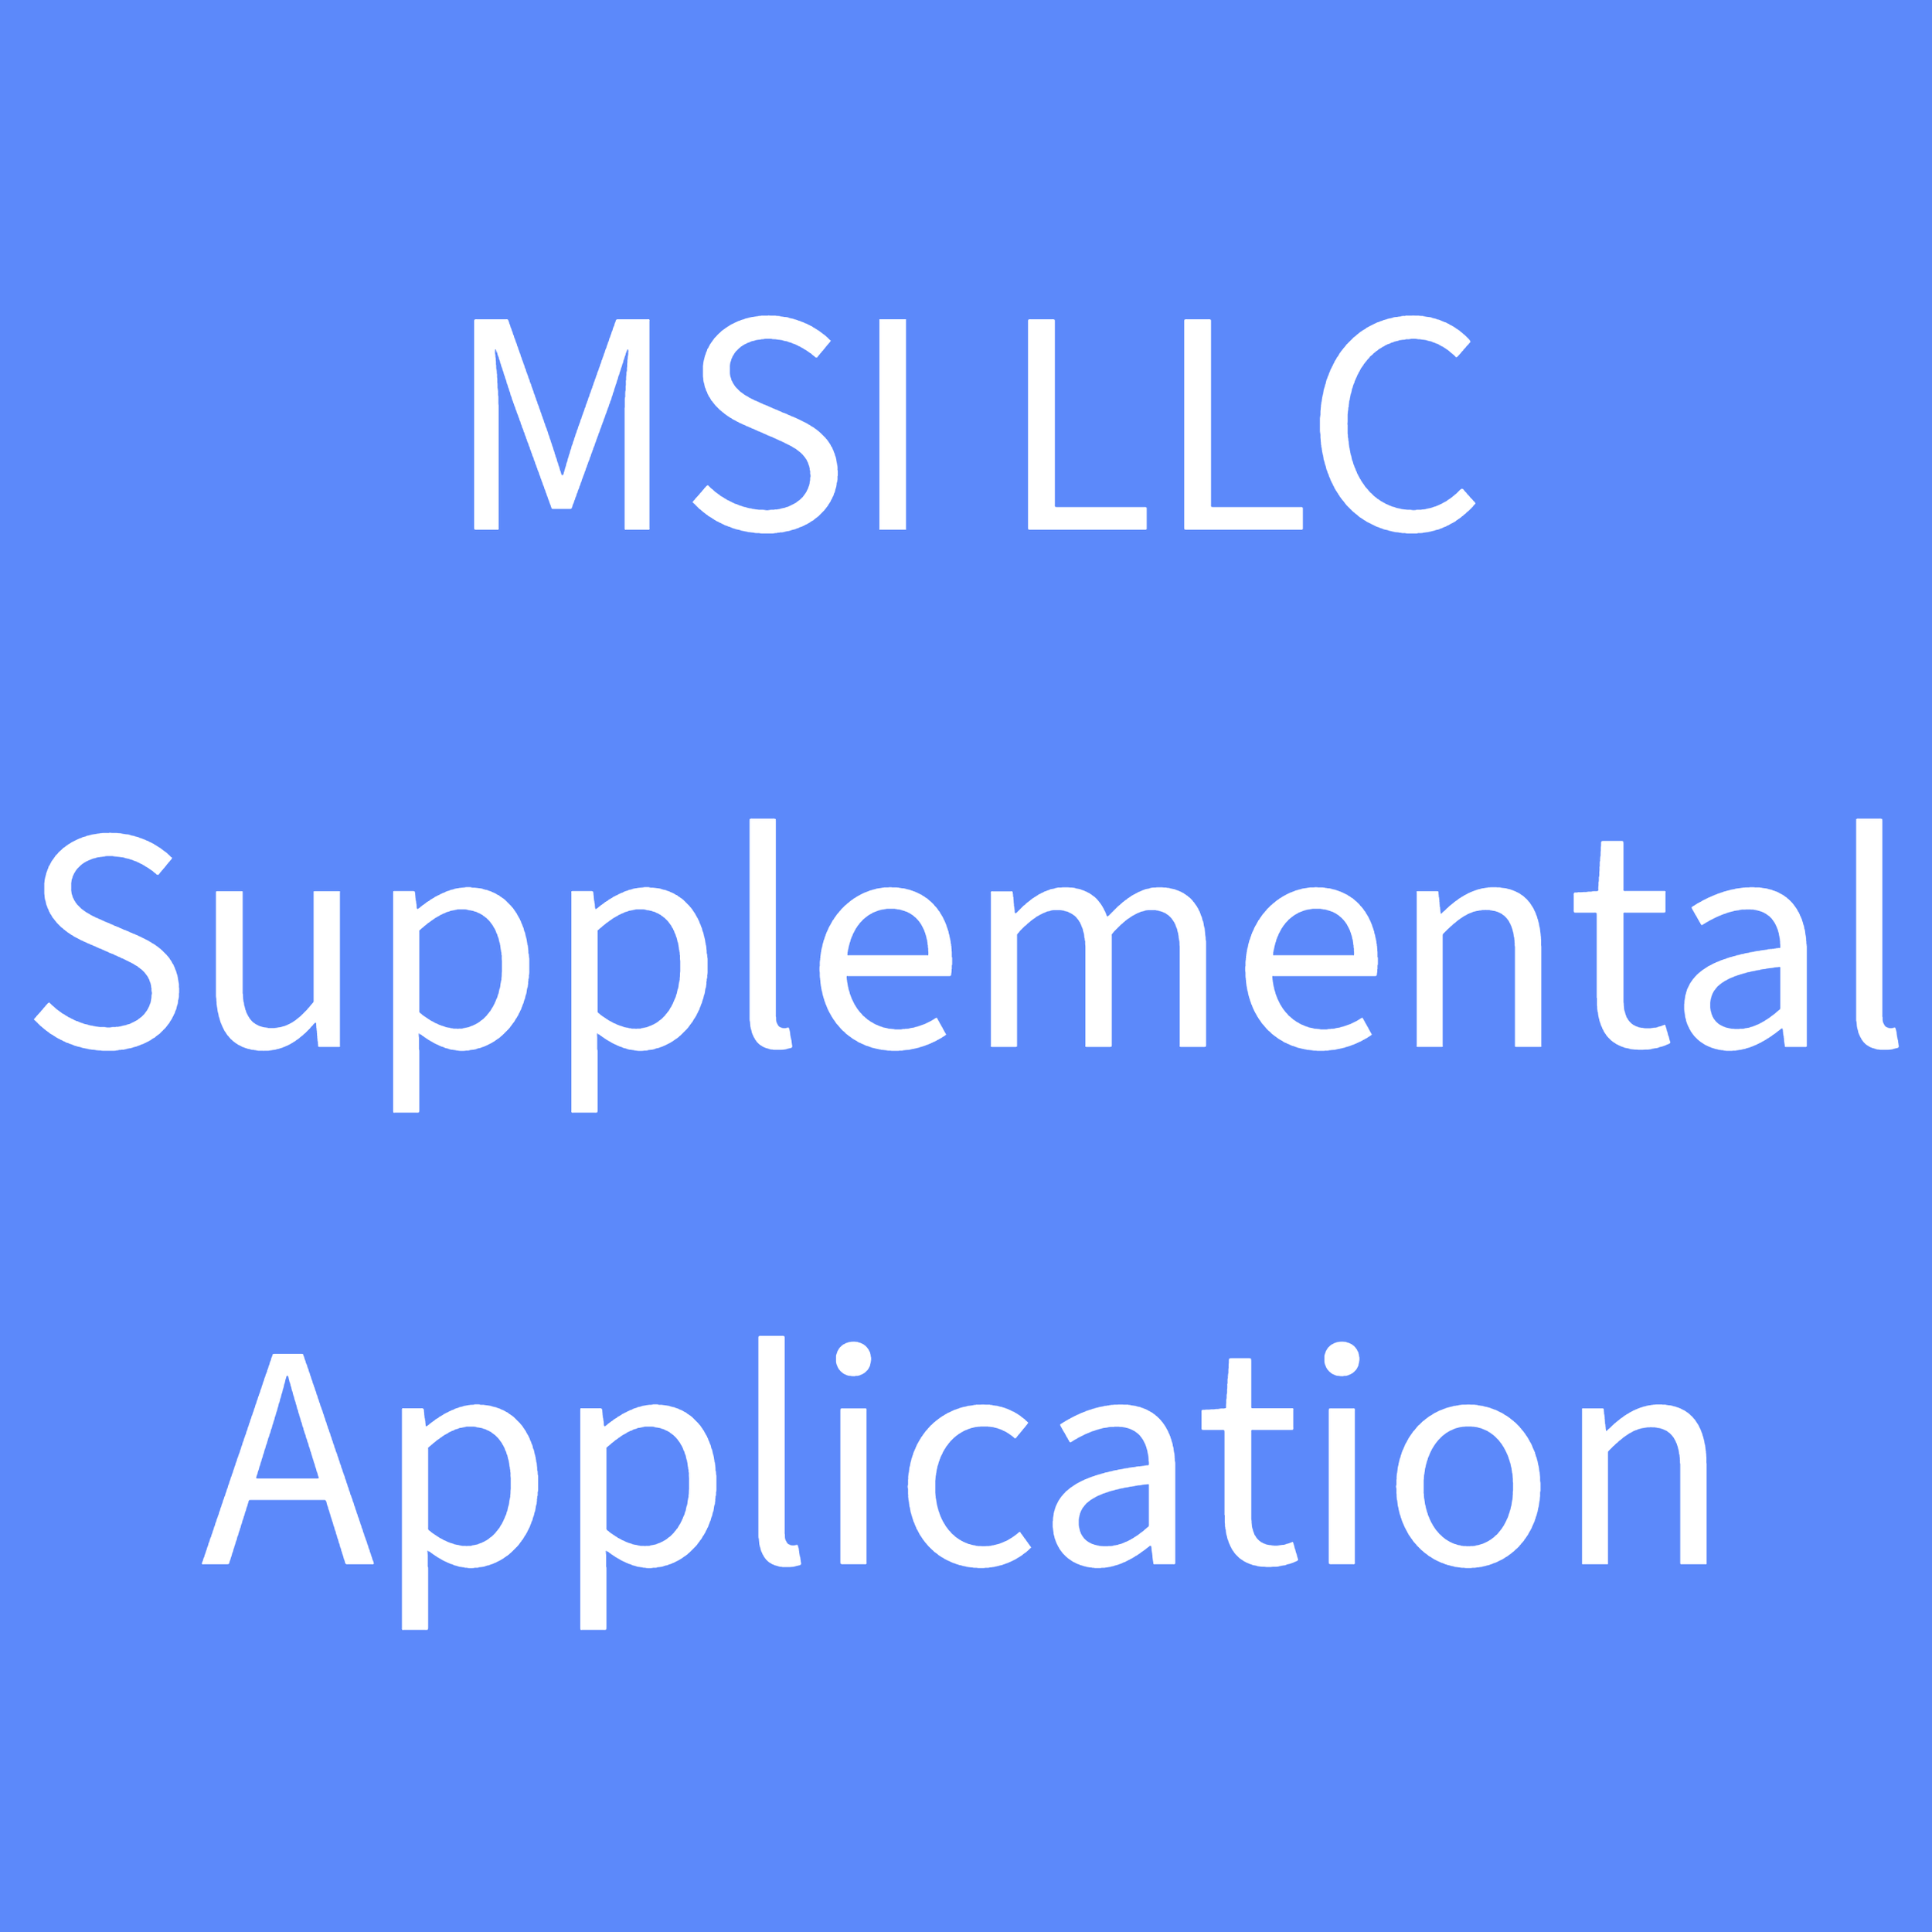 MSI LLC supplemental Application